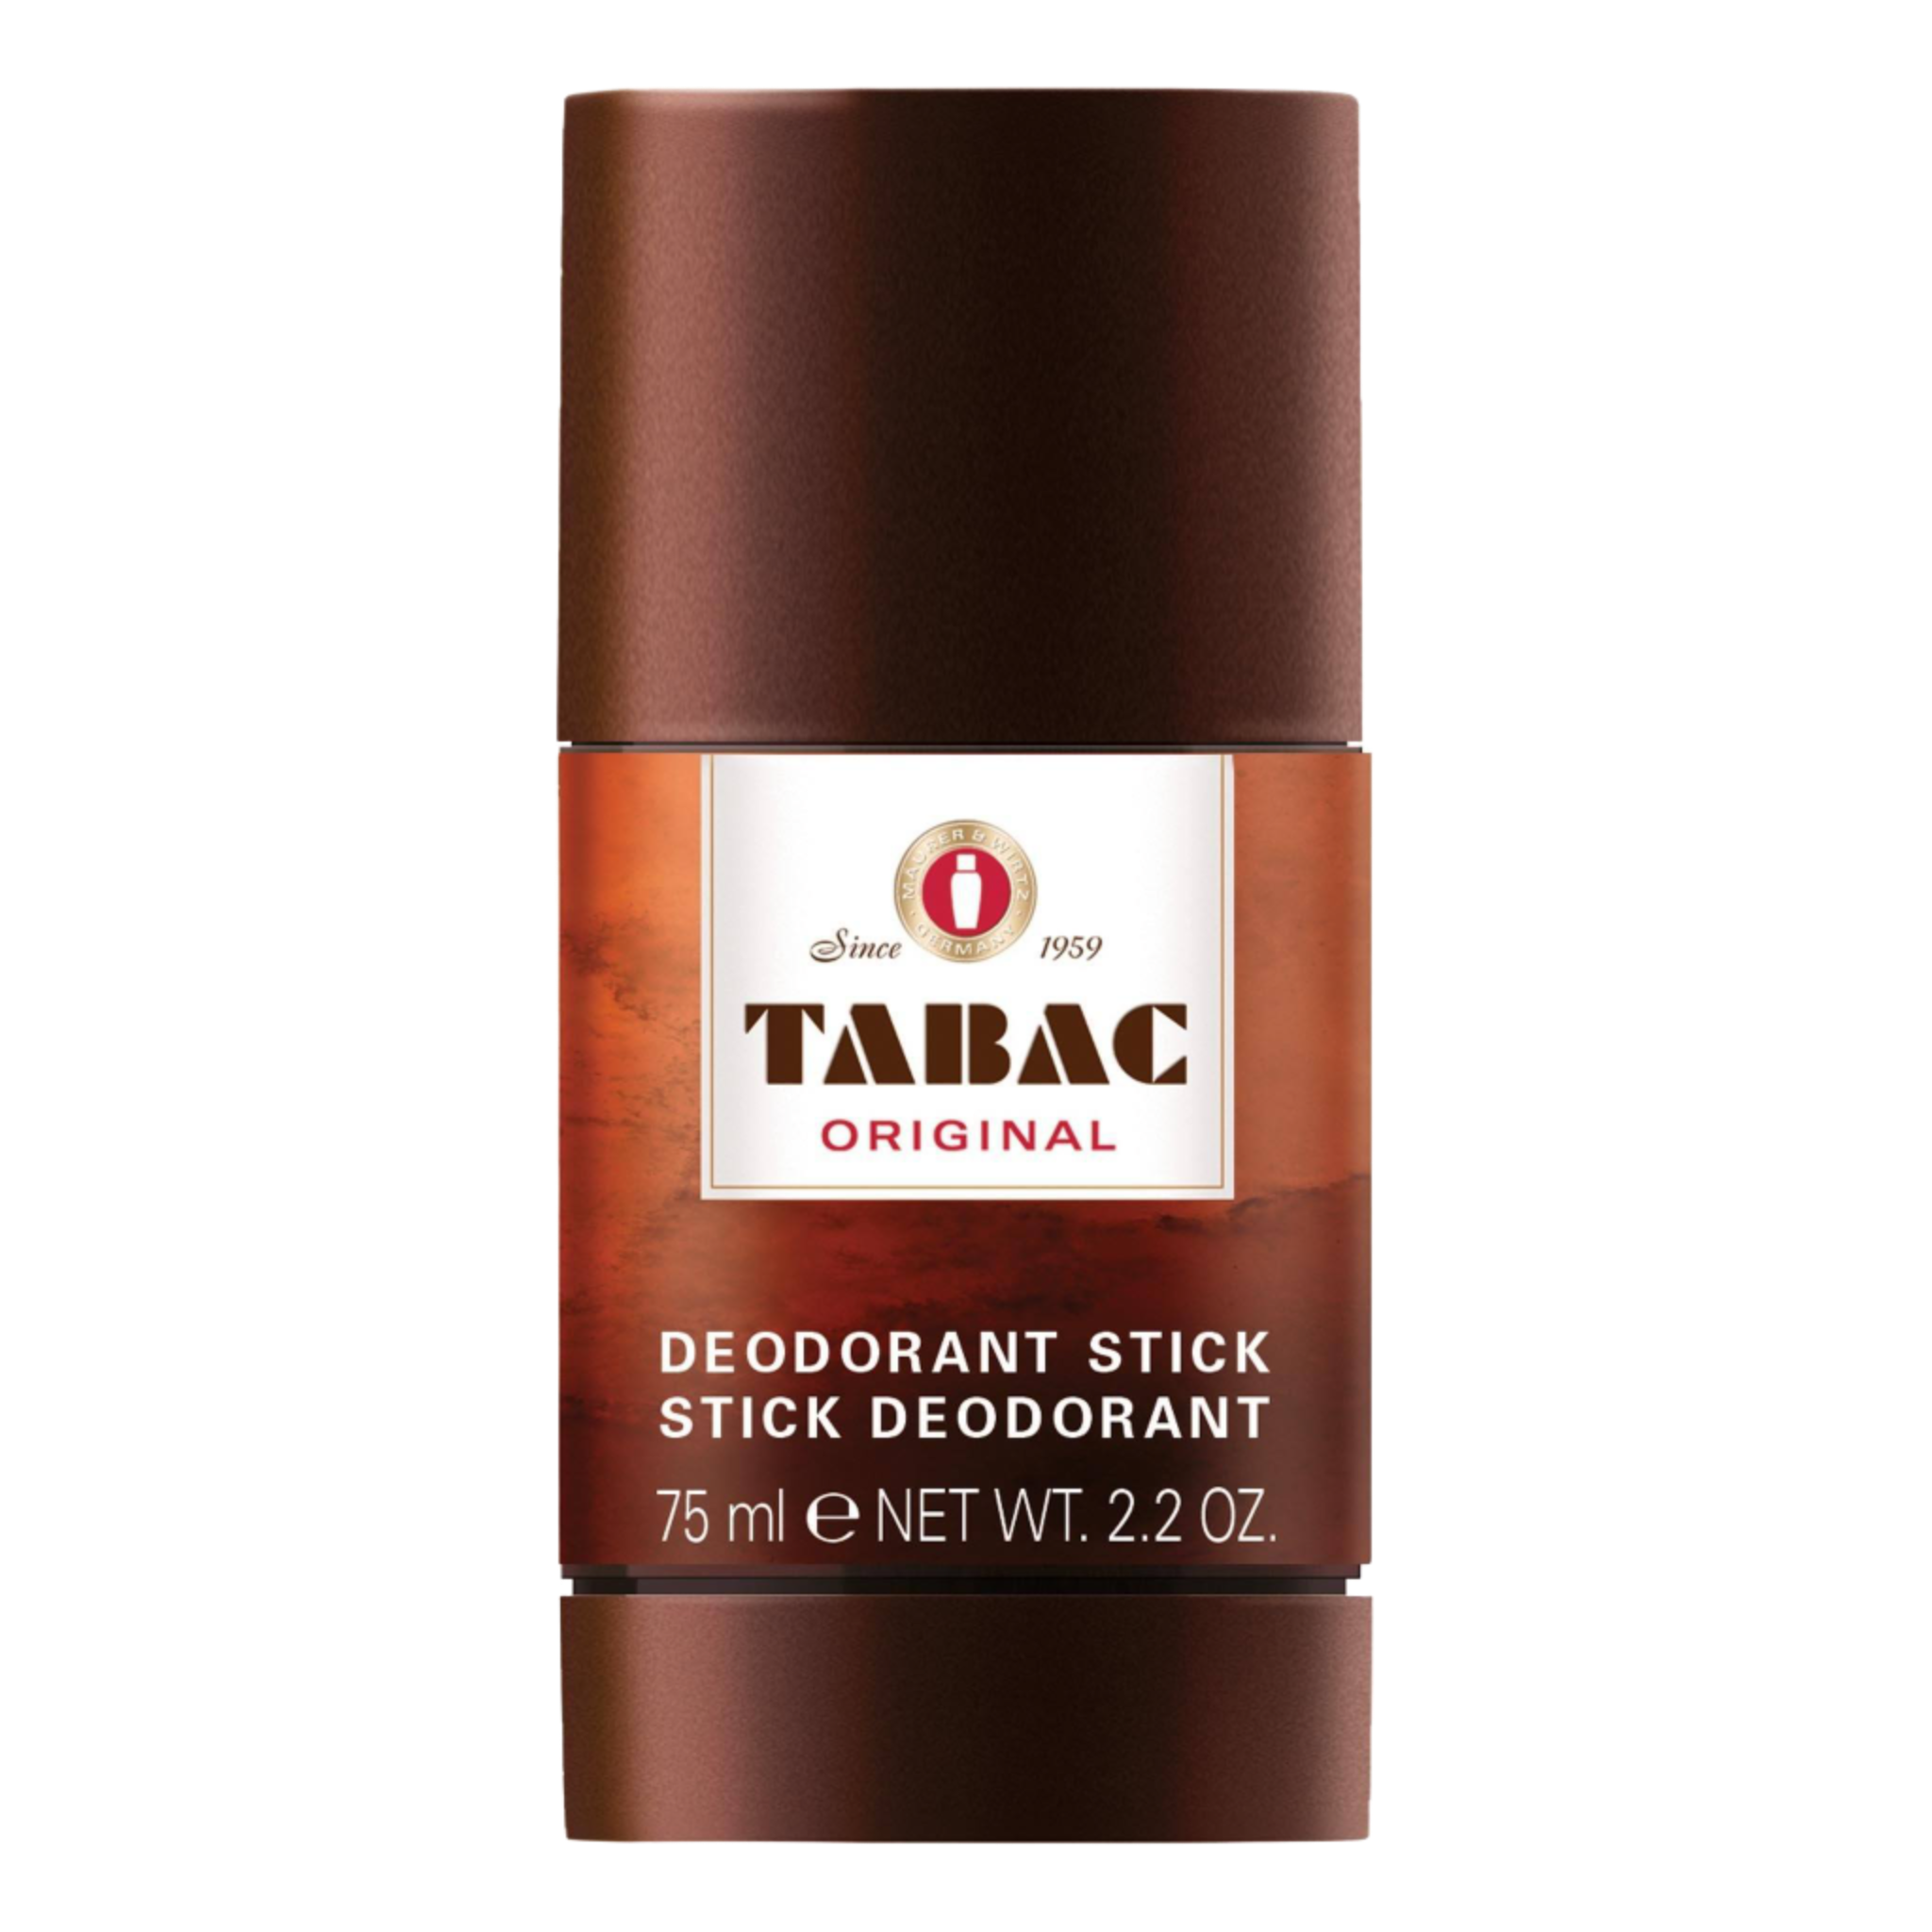 Tabac deodorant 